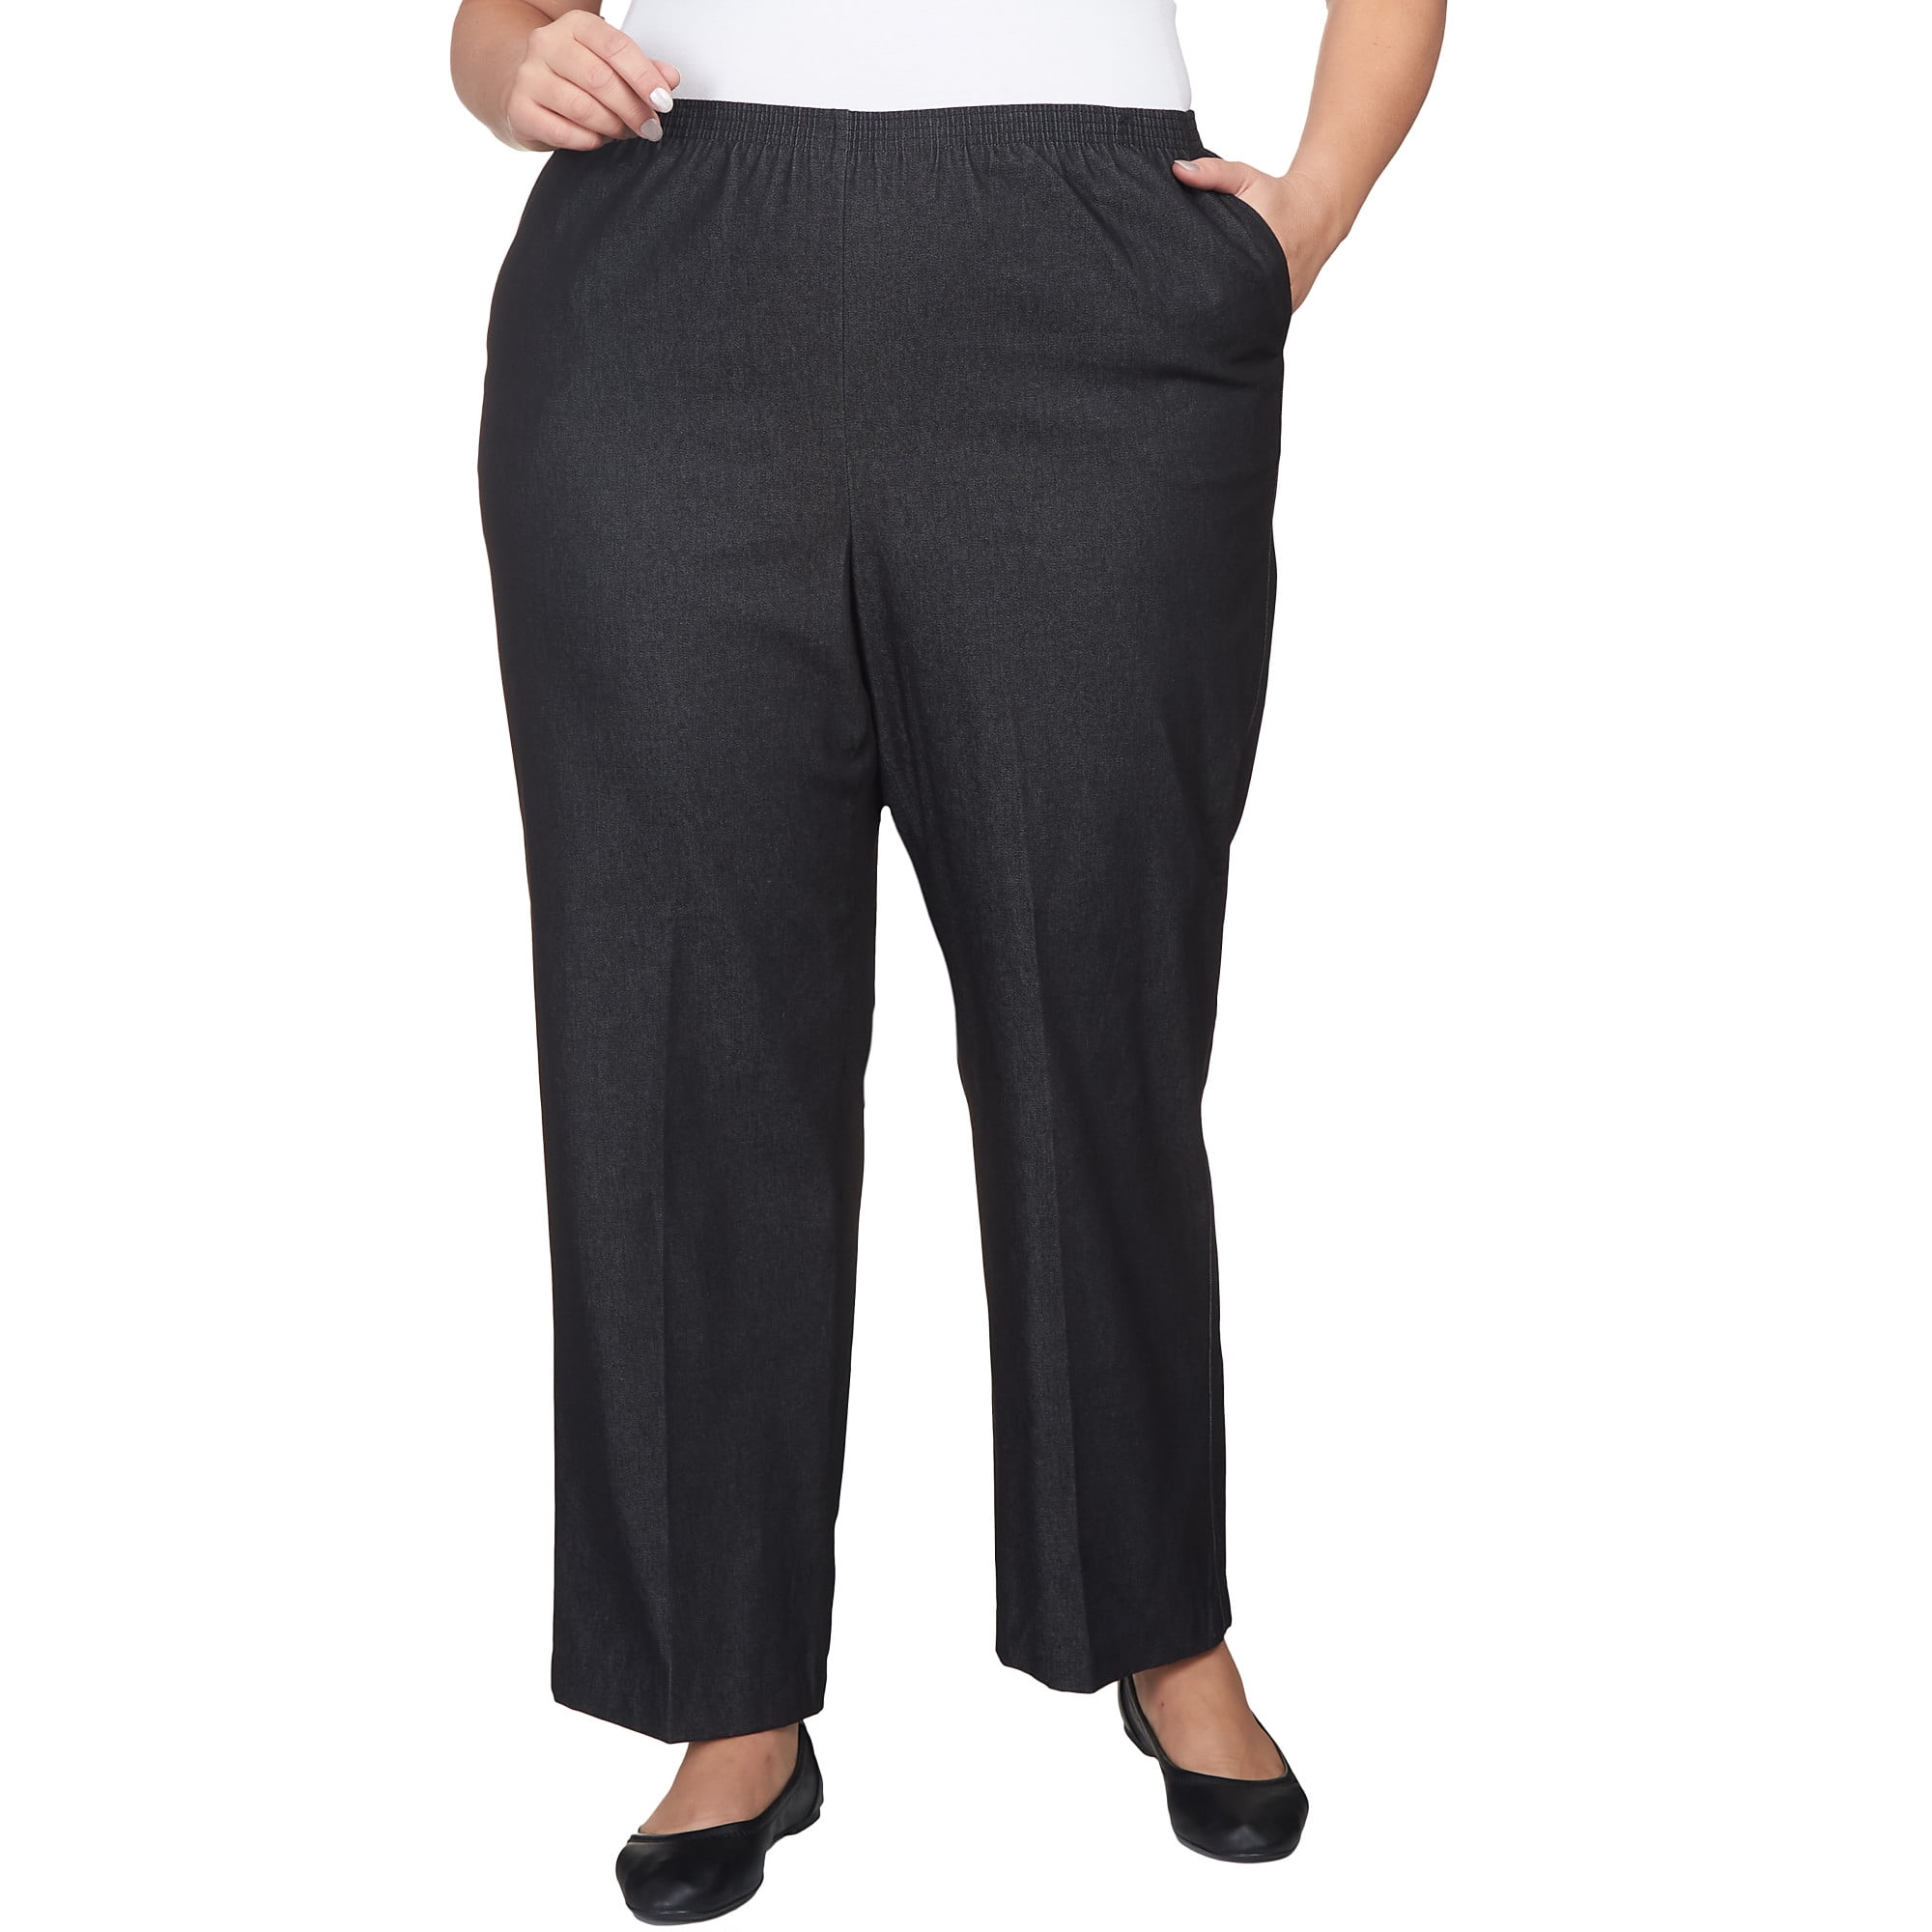 Alfani Women's Comfort Waistband Skinny Pants Black Size 24W 